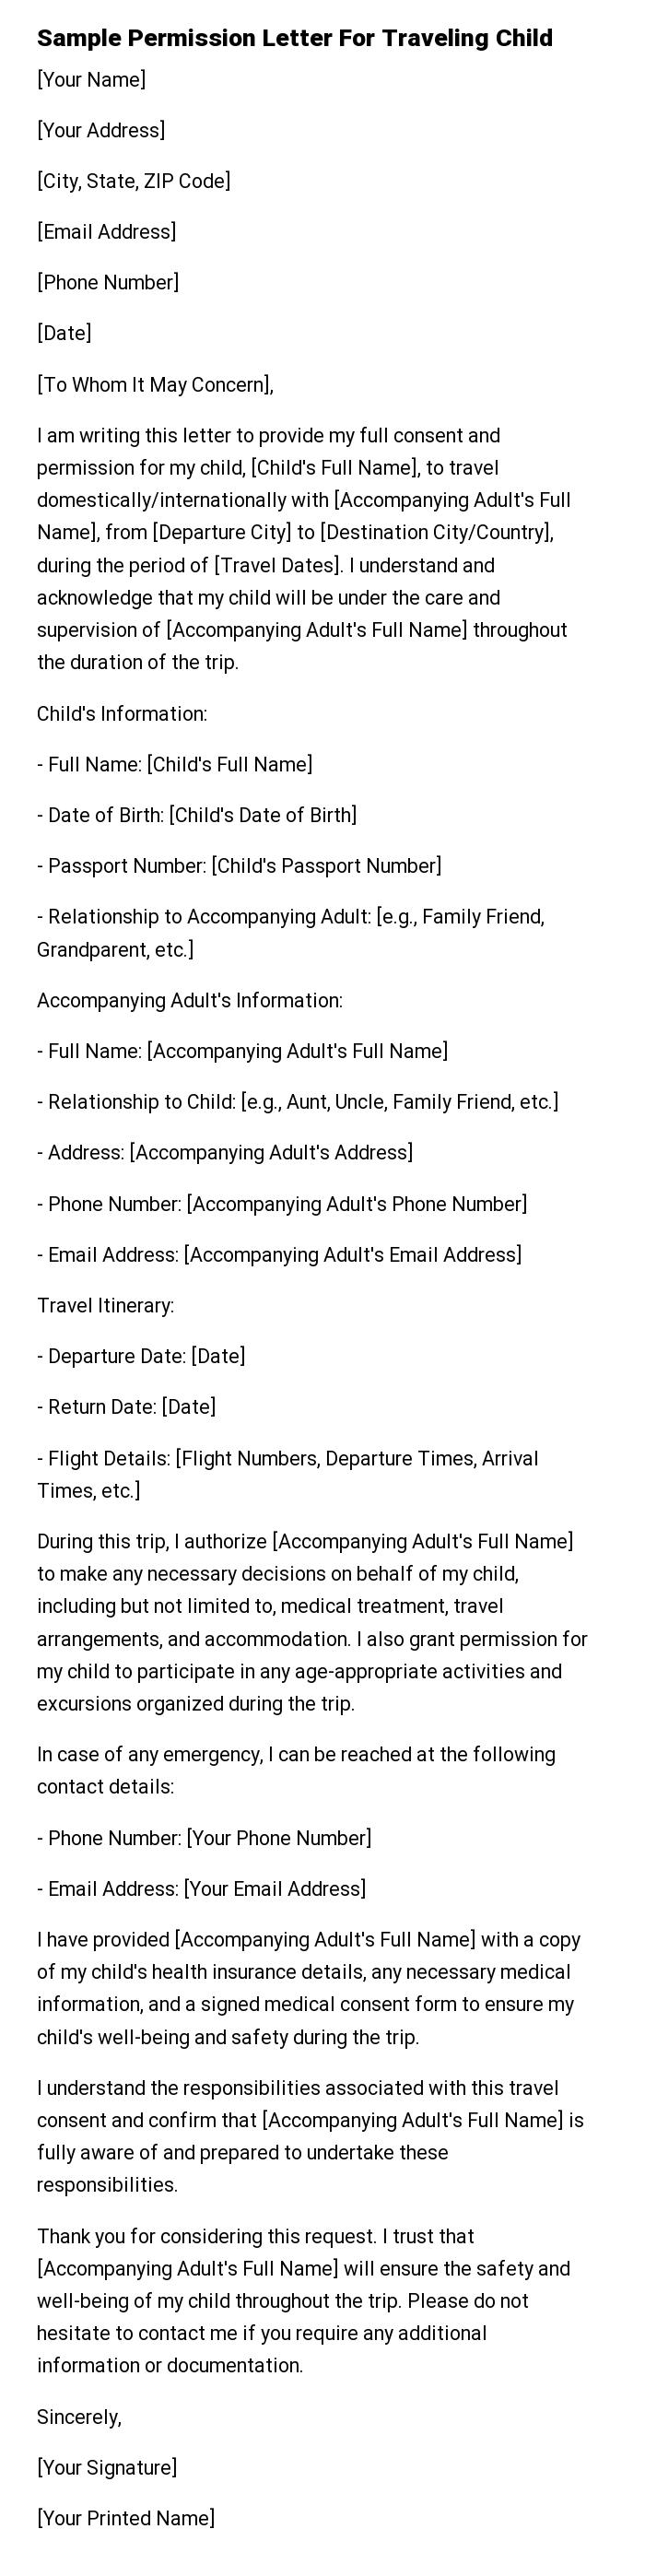 Sample Permission Letter For Traveling Child